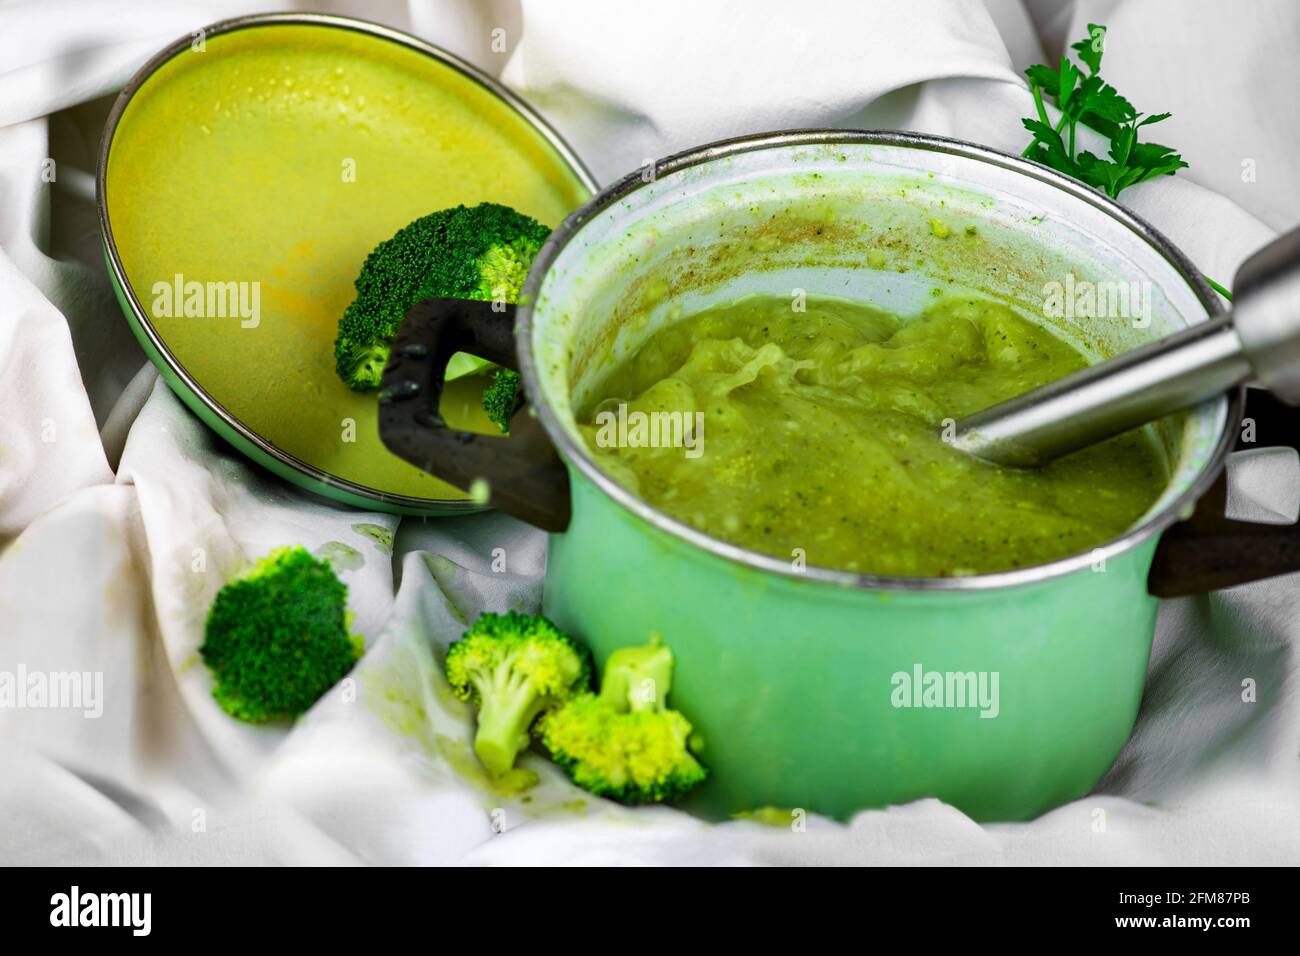 https://c8.alamy.com/comp/2FM87PB/immersion-blender-in-green-pot-with-broccoli-soup-on-white-background-preparation-of-vegetarian-broccoli-soup-2FM87PB.jpg